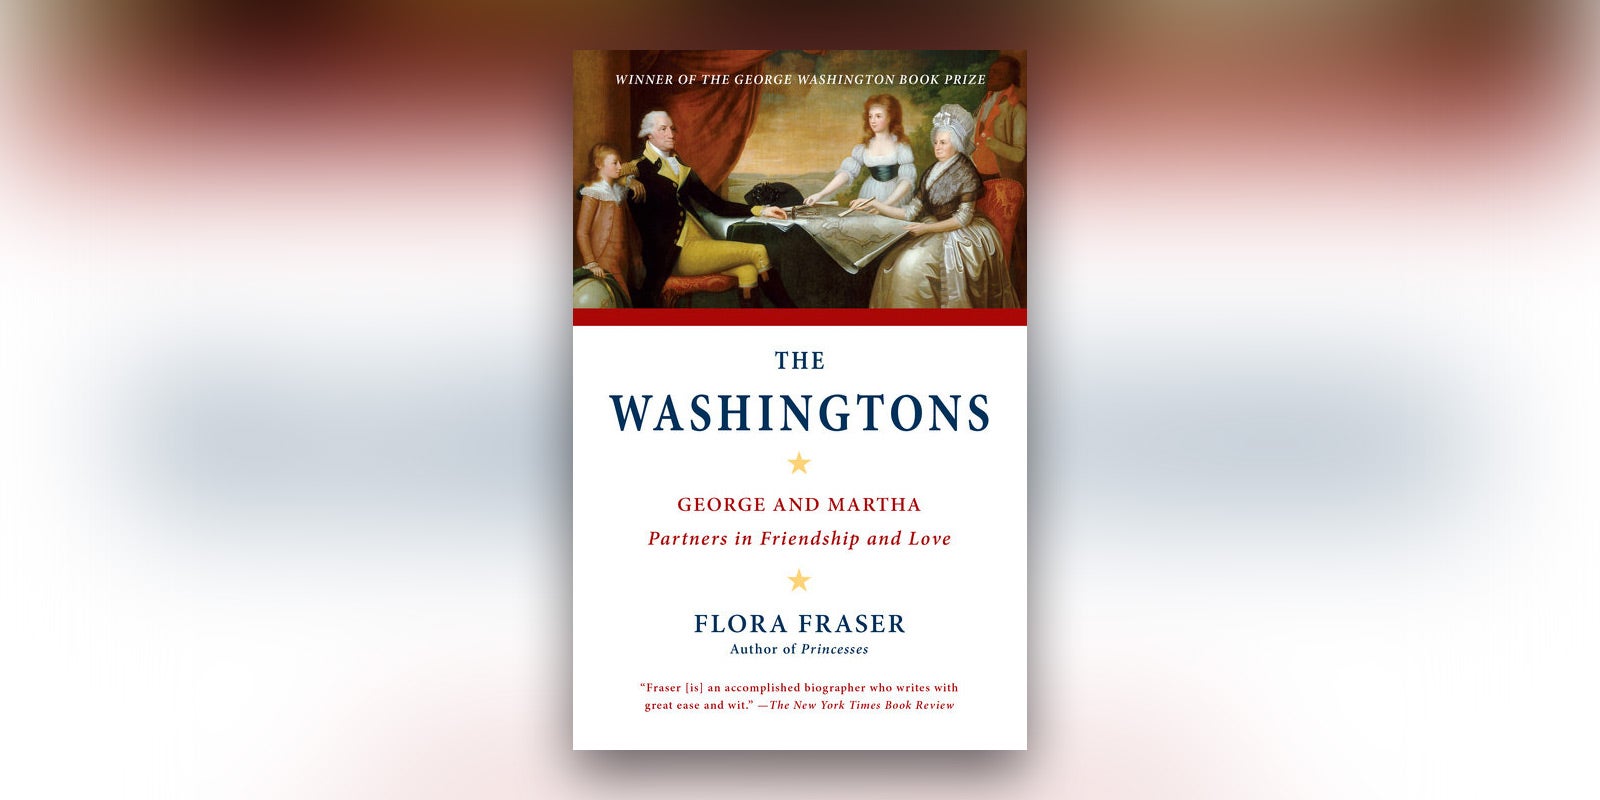 Flora Fraser awarded 2016 George Washington Prize